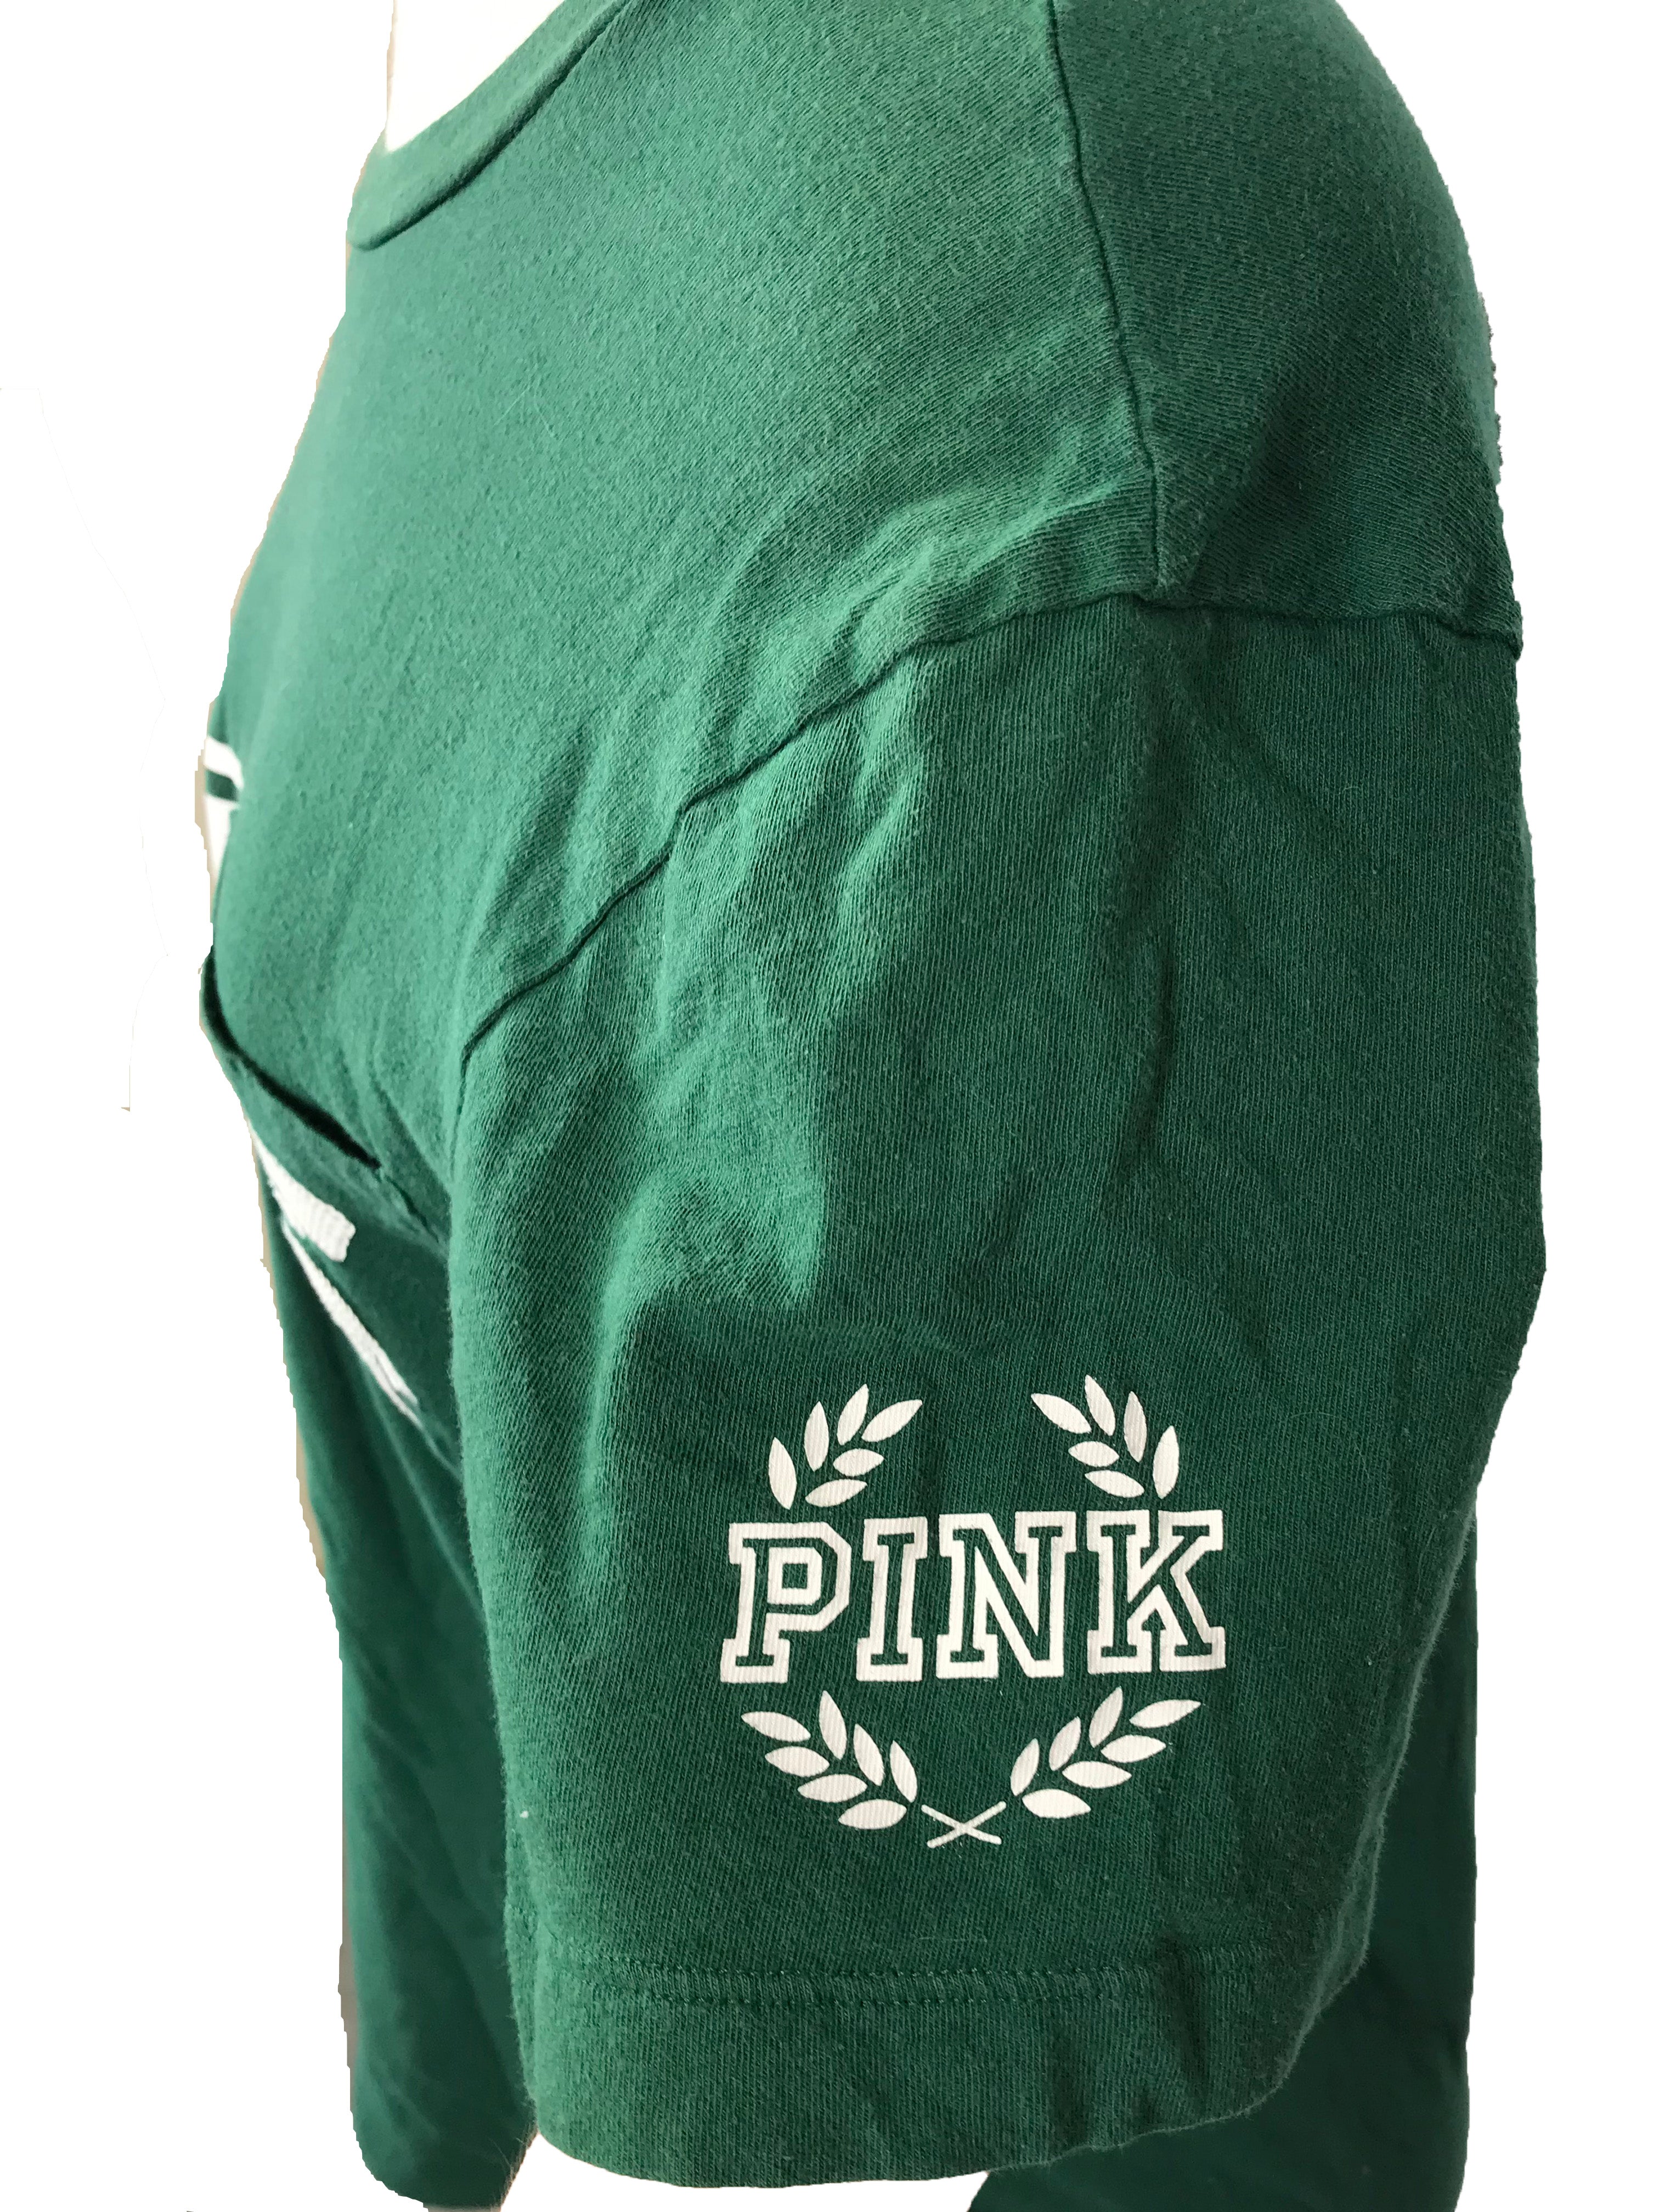 Victoria's Secret Pink MSU Green T-Shirt Women's Size X-Small